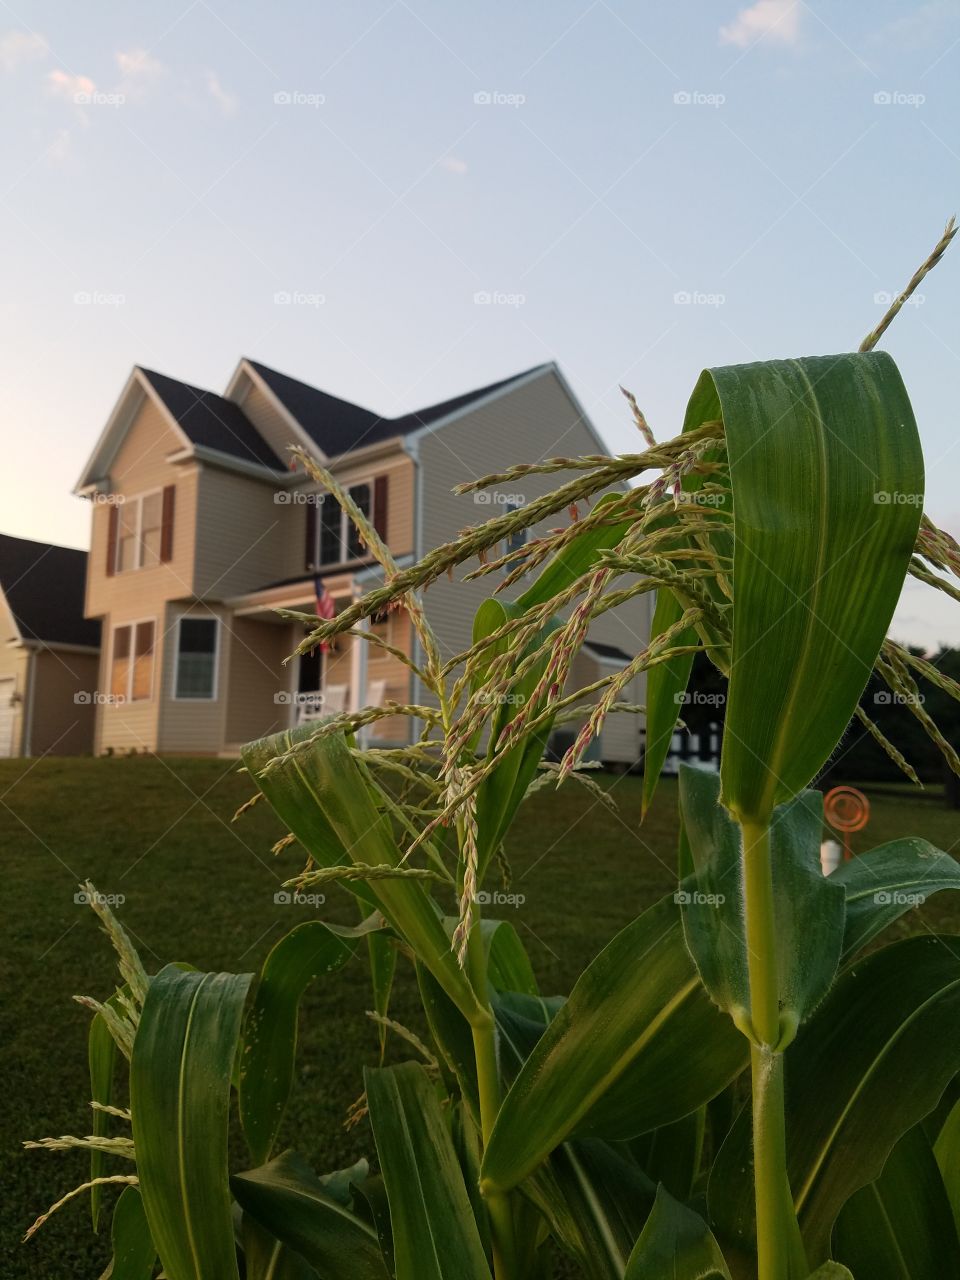 House thru the corn fields